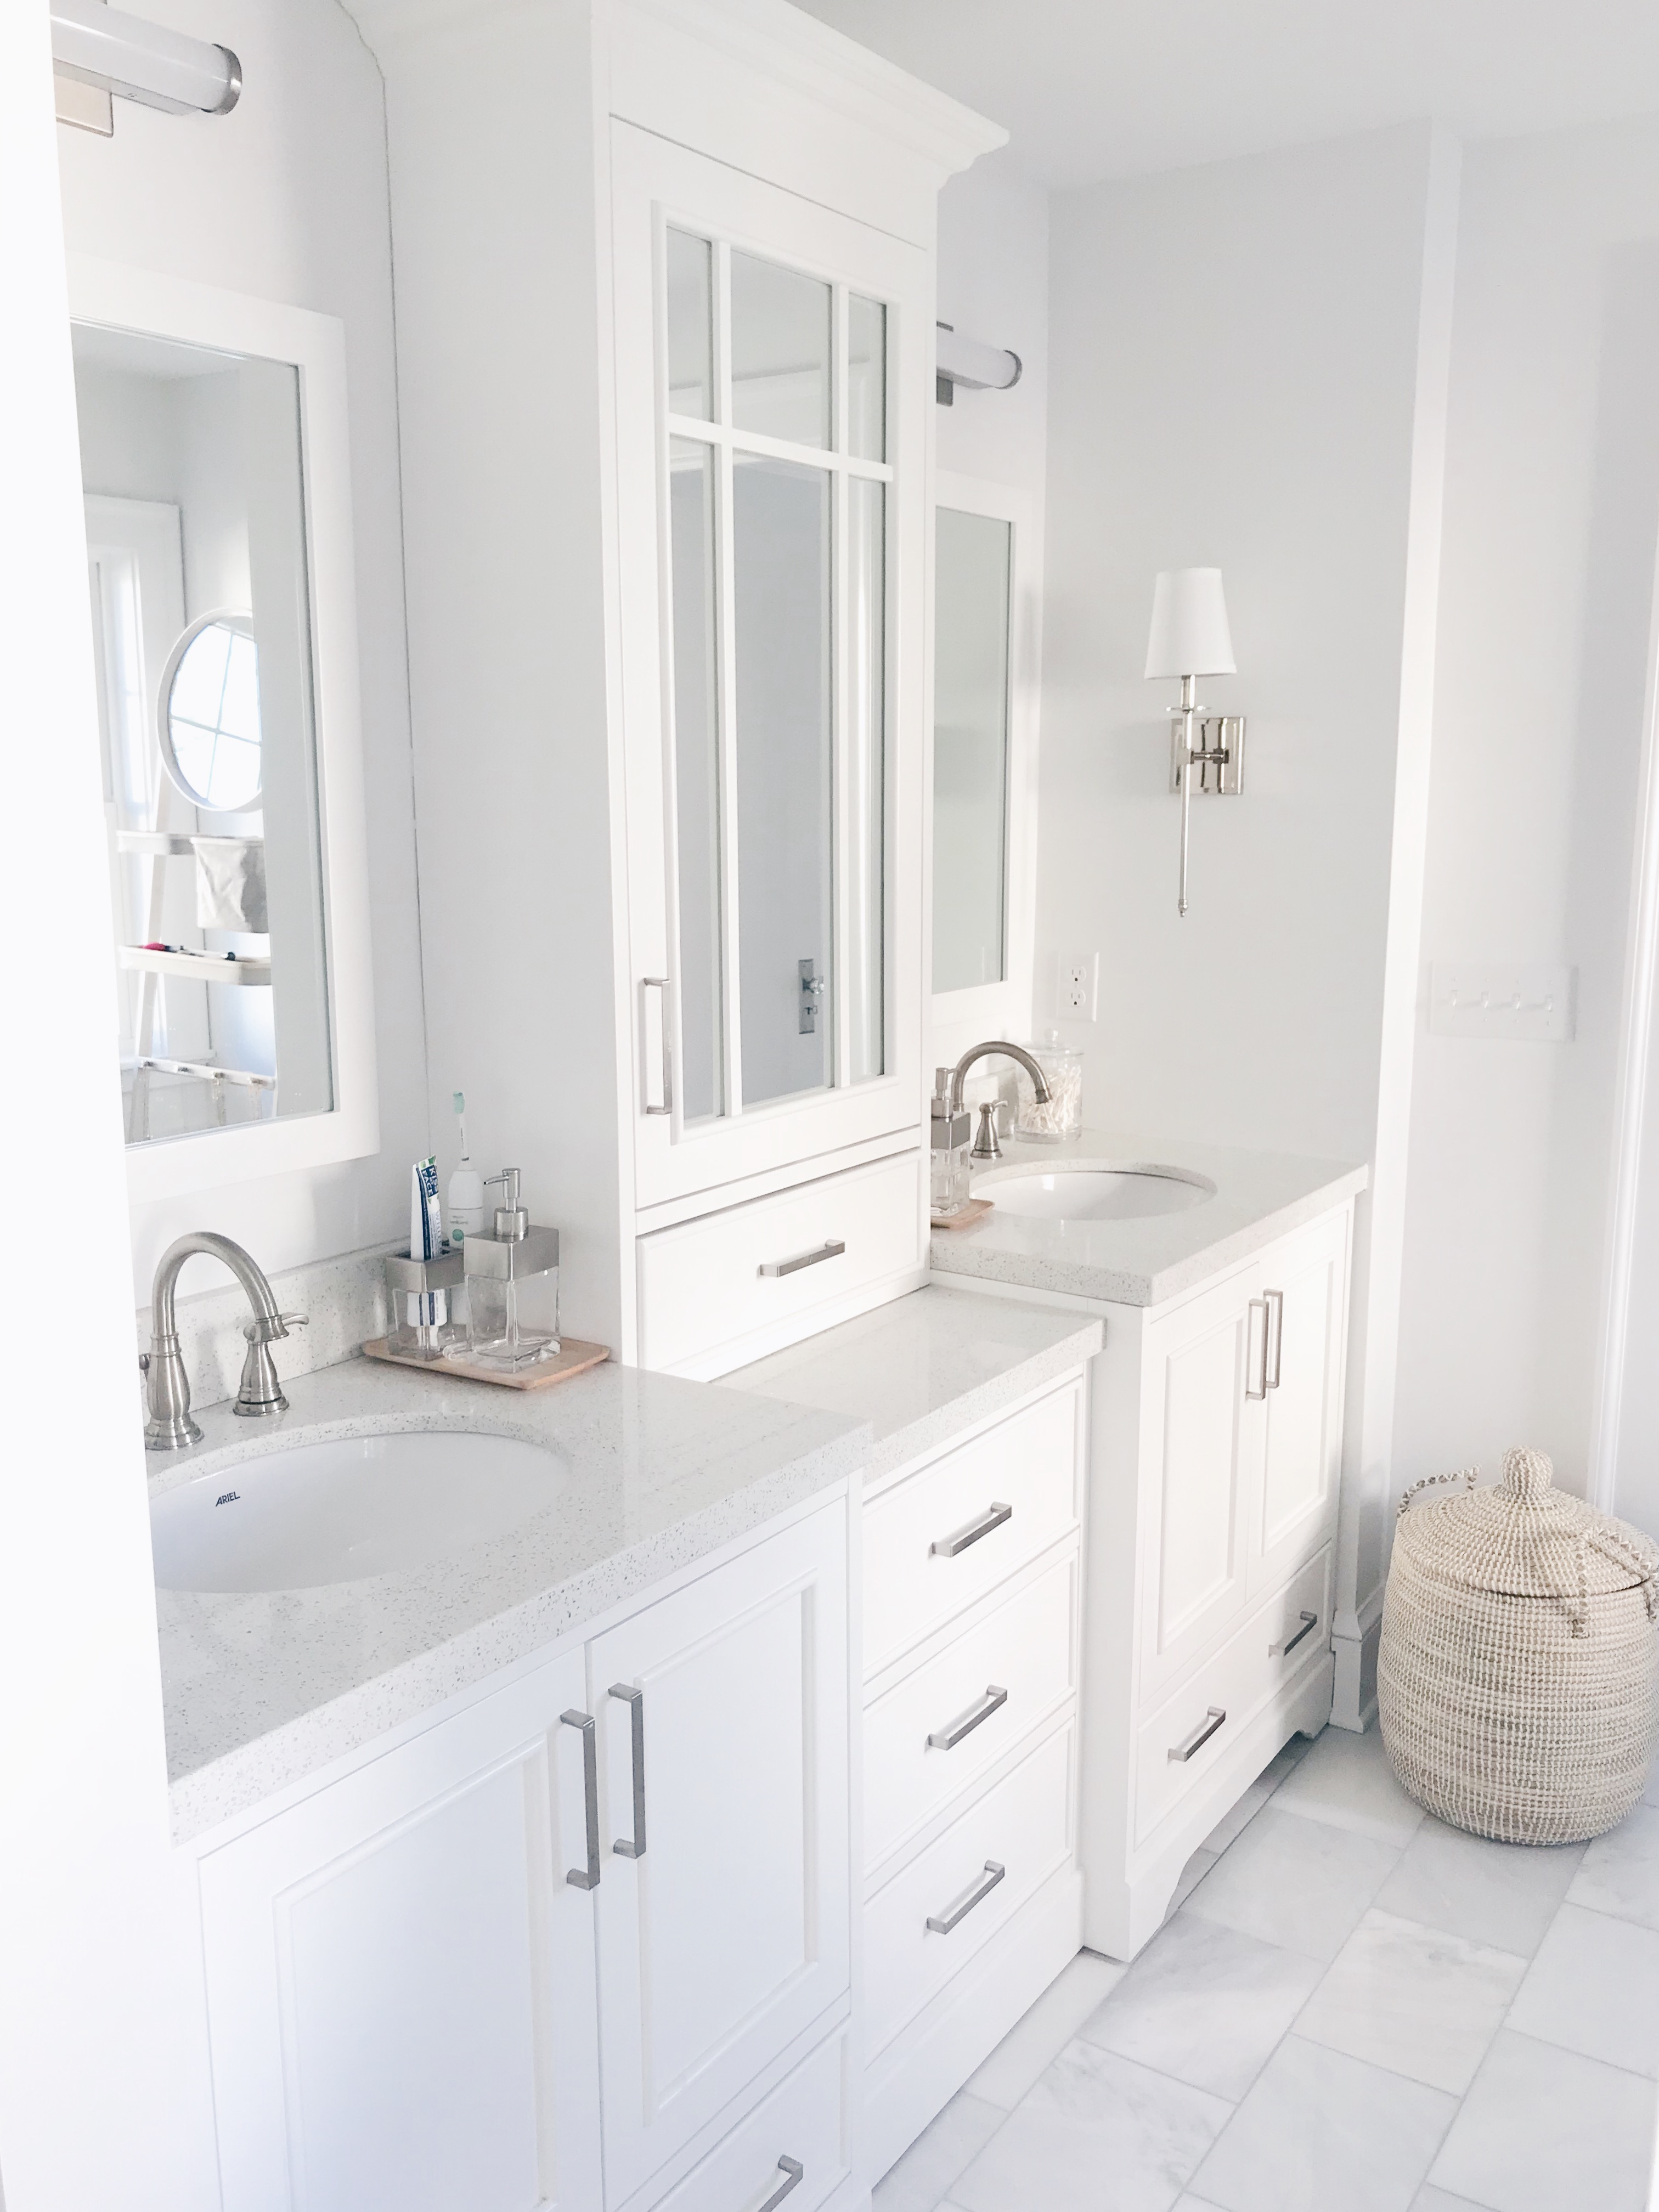  custom look white vanity with tower under $3,000 on pinteresting plans blog